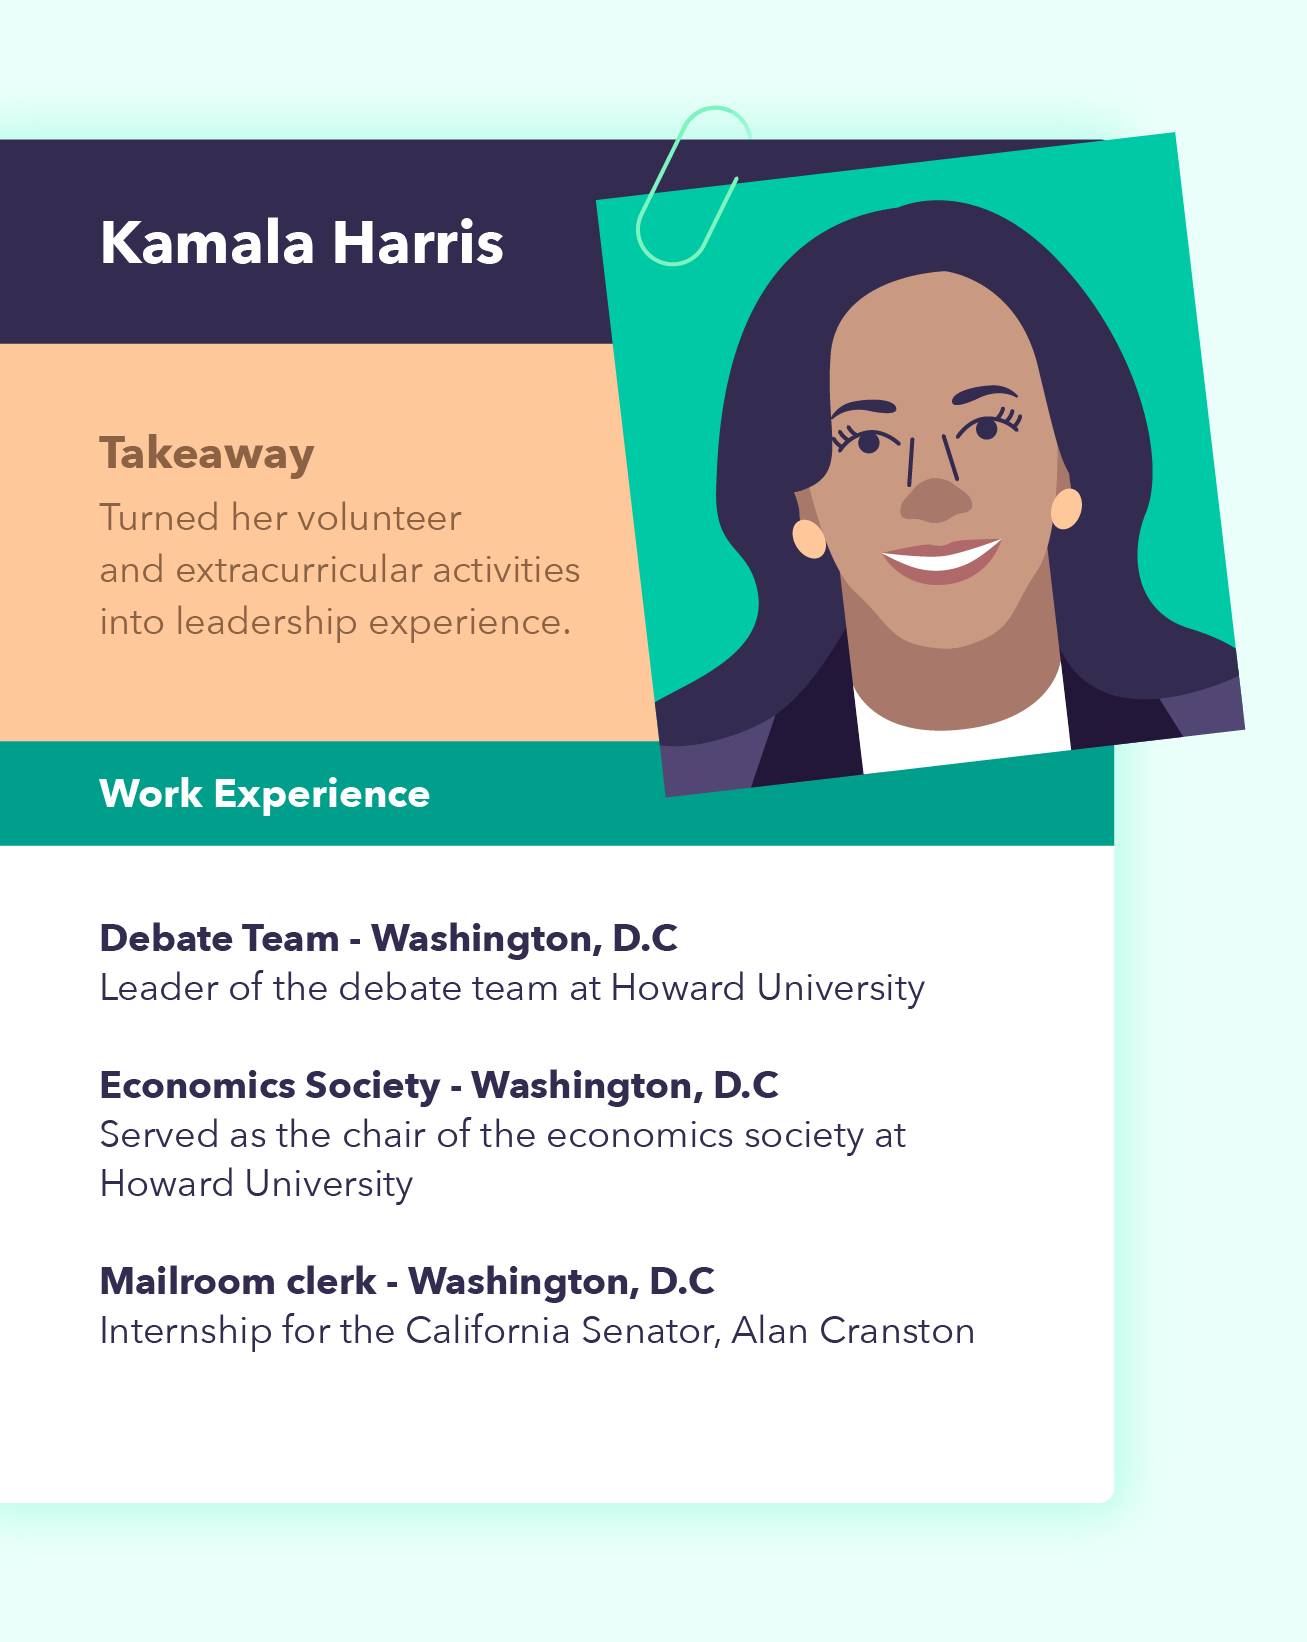 An illustration of Kamala Harris' first resume.